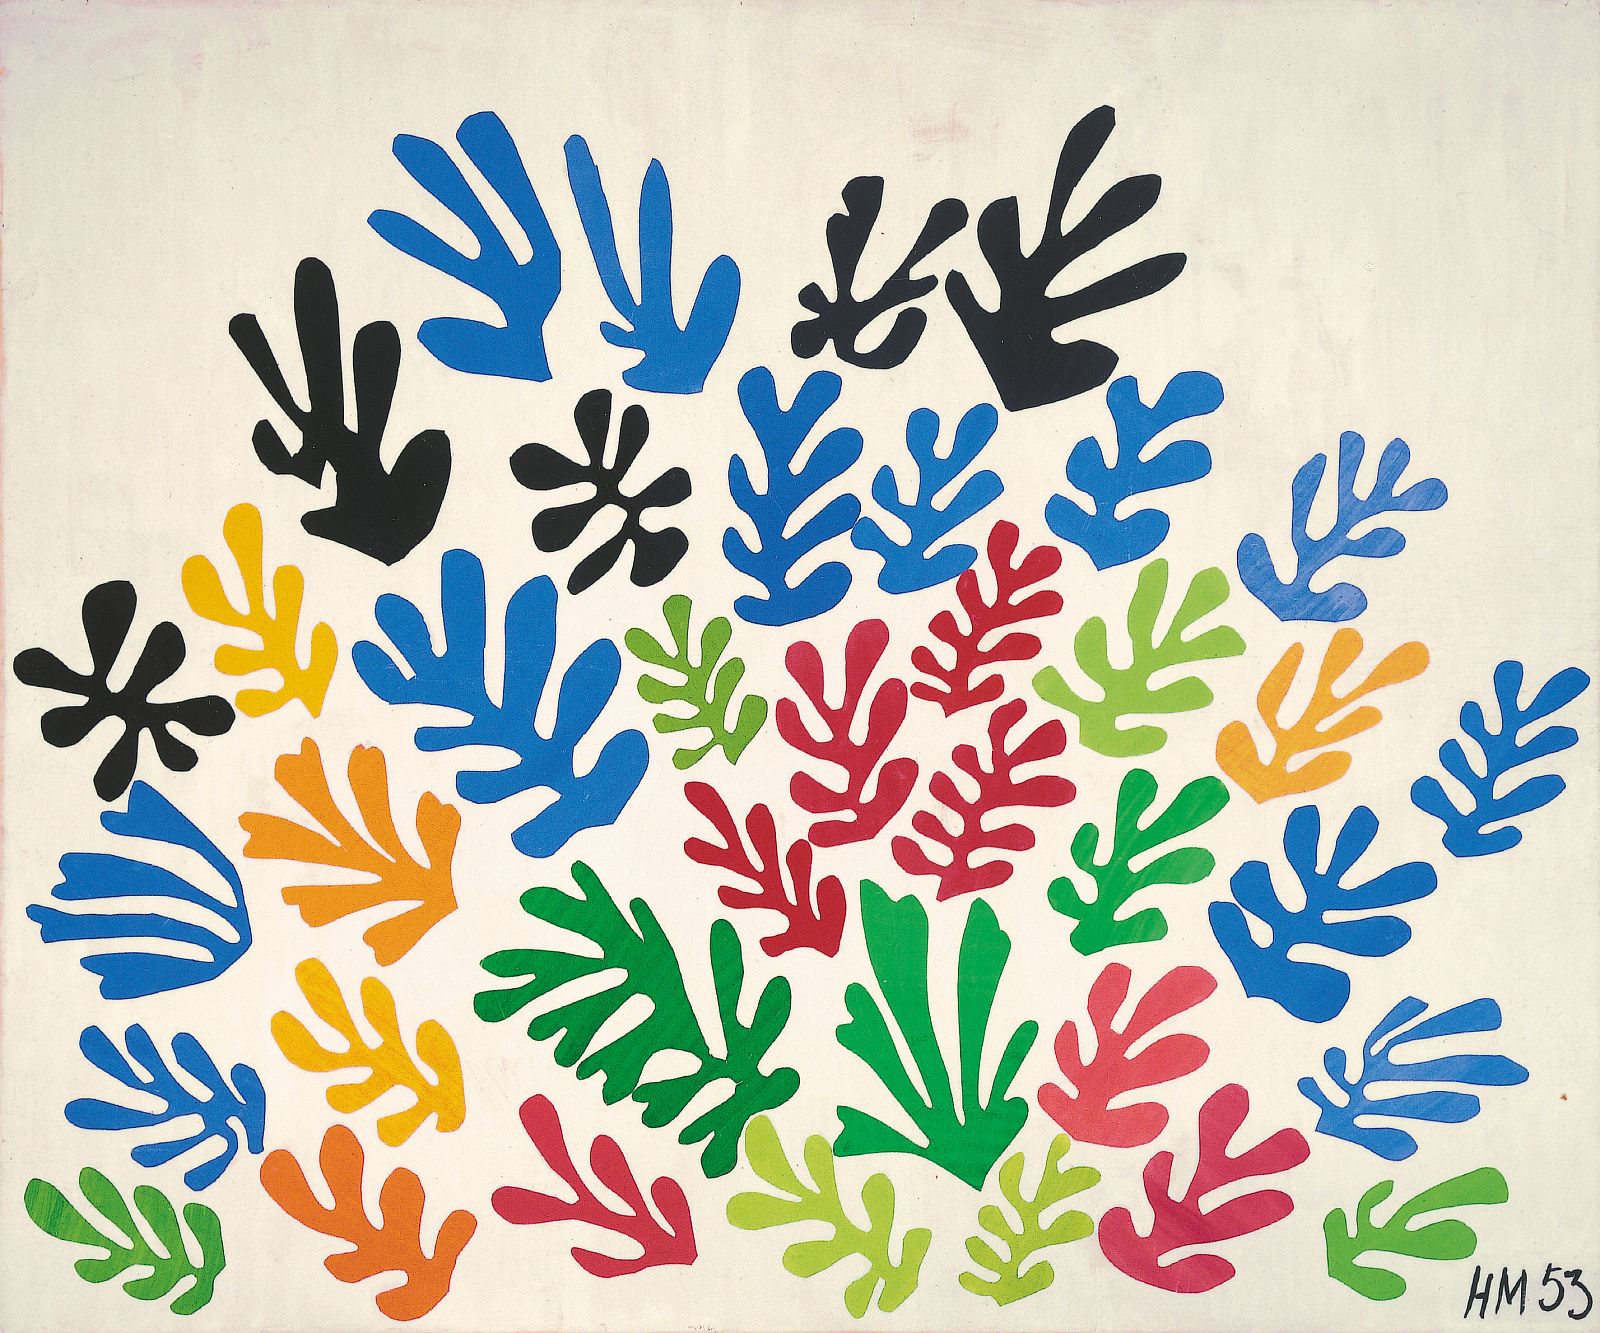 Henri Matisse "La gavilla" (1953)